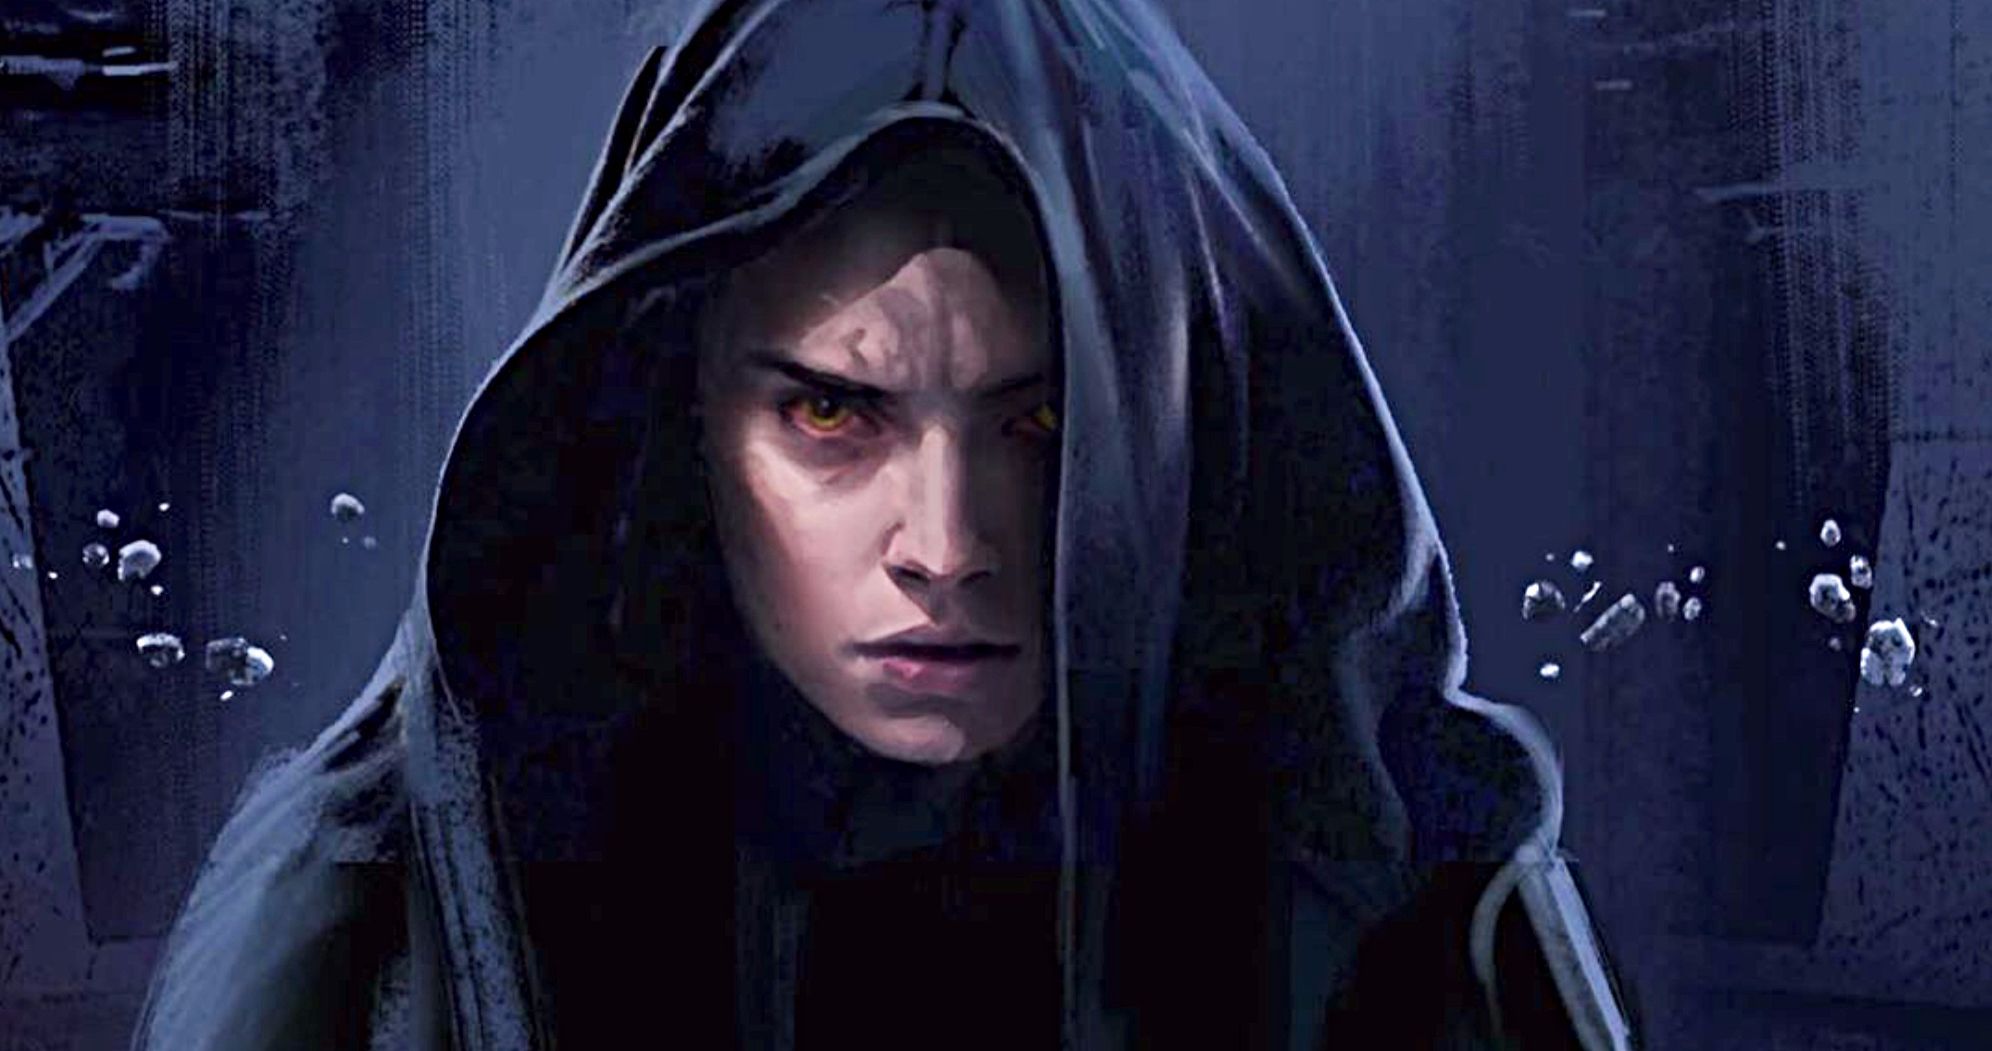 Dark Rey Goes Full Empress Palpatine in New The Rise of Skywalker Art